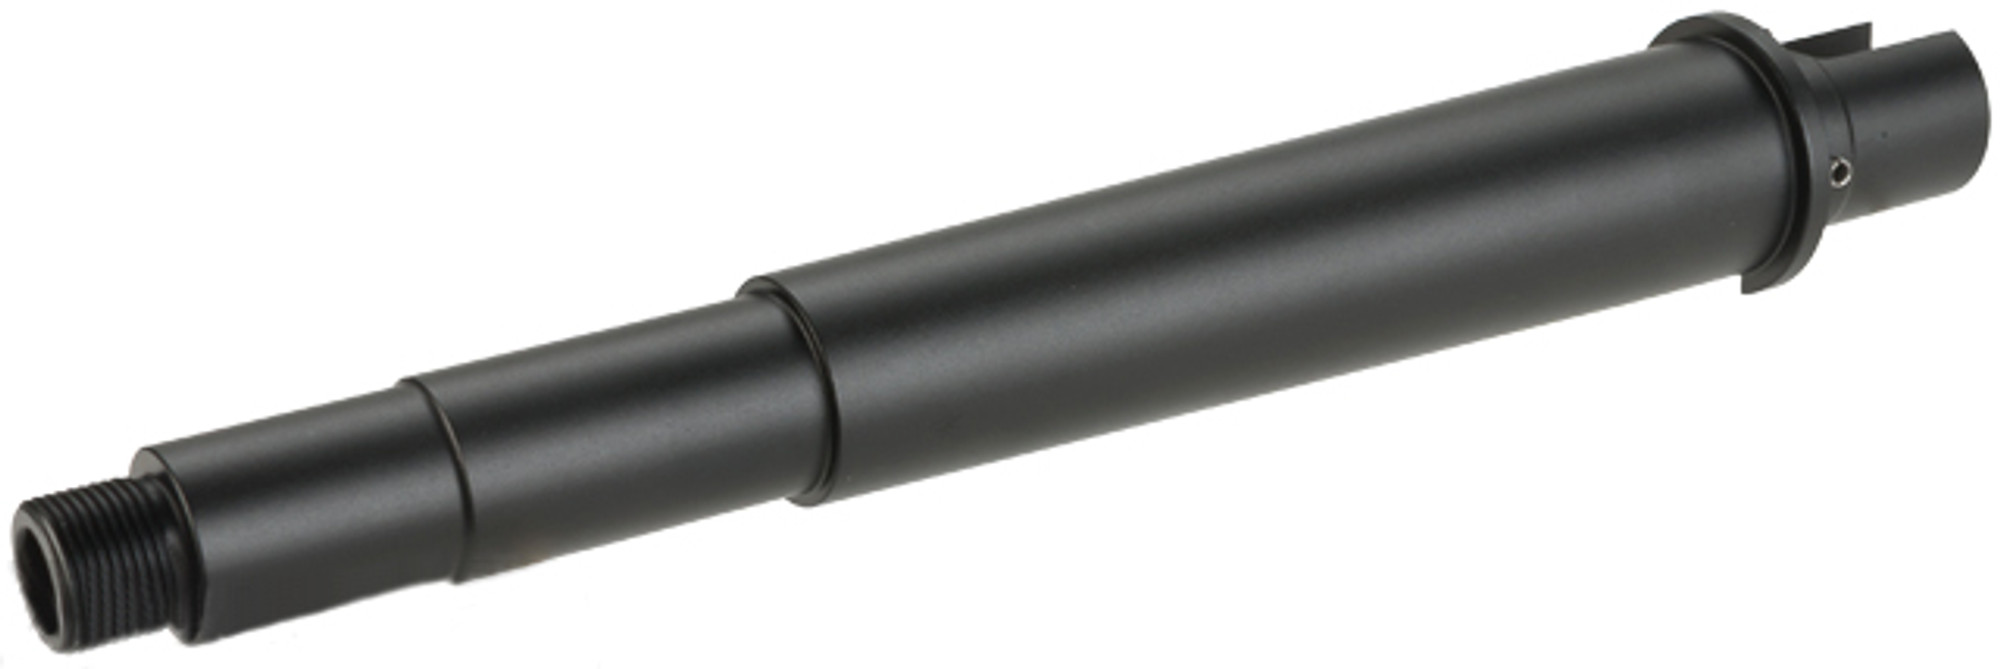 G&P CNC Aluminum Outer Barrel for M4 / M16 Series Airsoft AEG Rifles - 8" URX CW (Black)